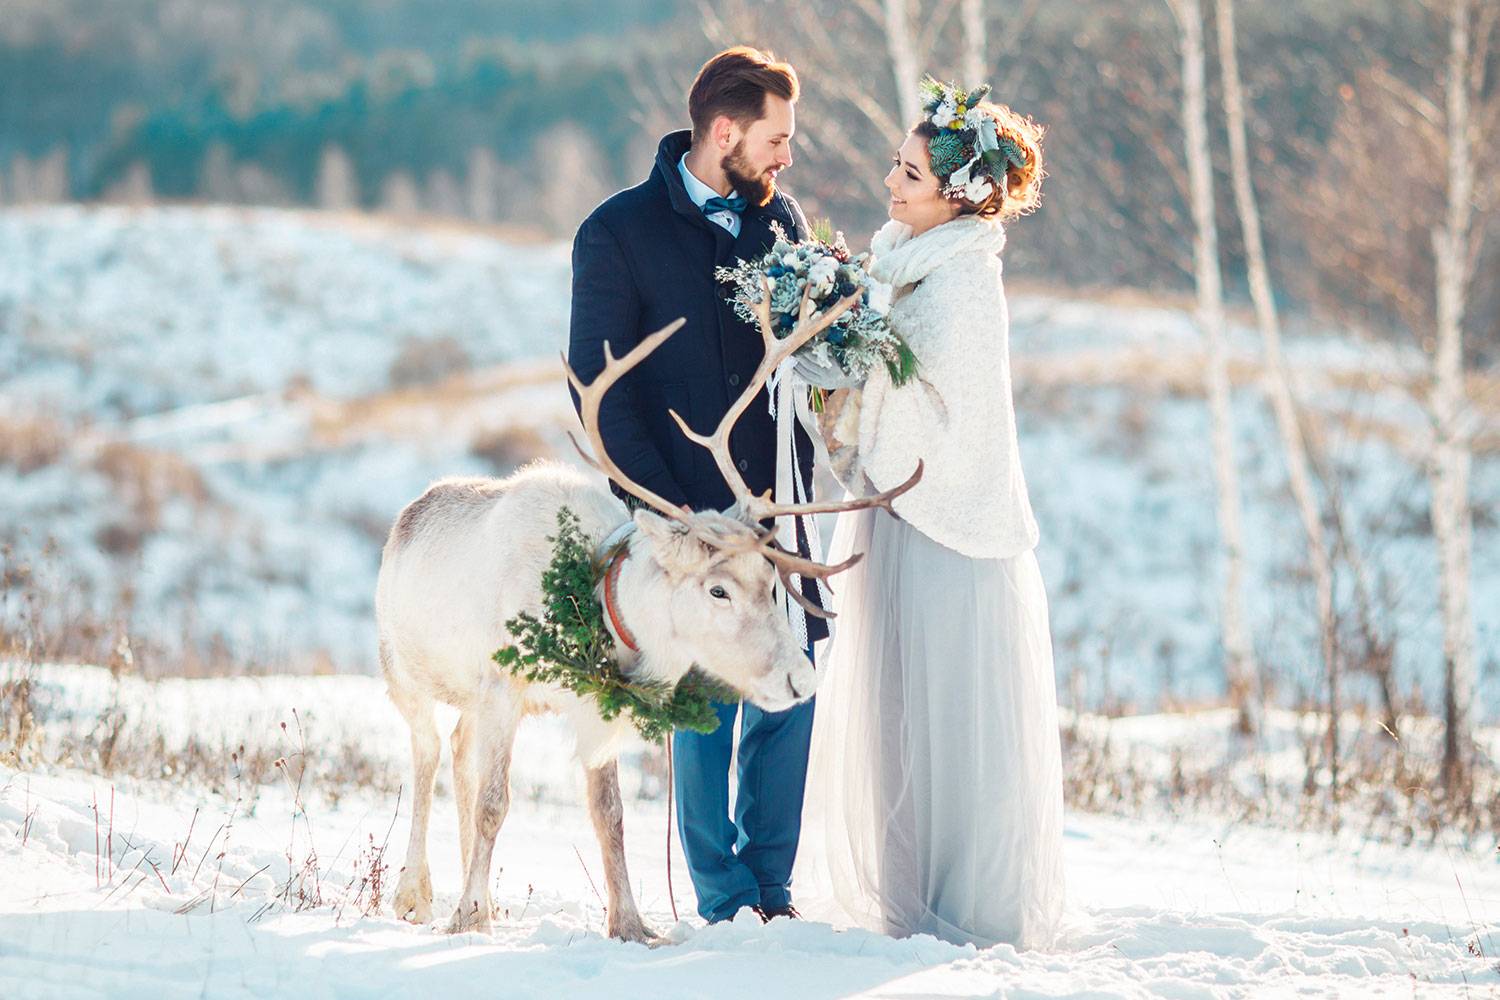 Romantic Winter Wedding Ideas For The Perfect Festive Celebration